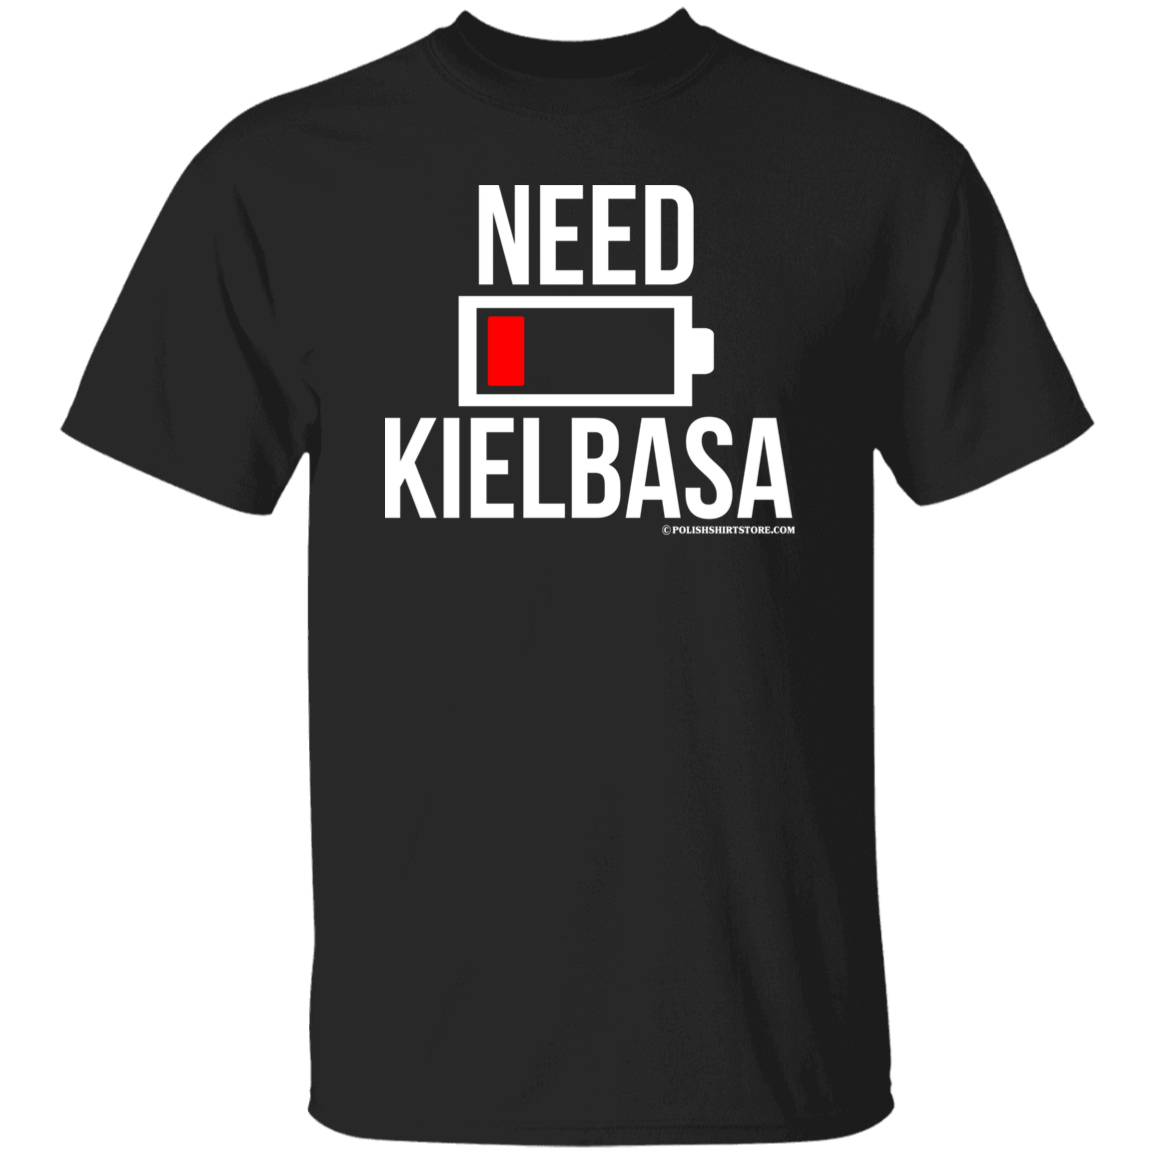 Need Kielbasa Battery Low Apparel CustomCat G500 5.3 oz. T-Shirt Black S